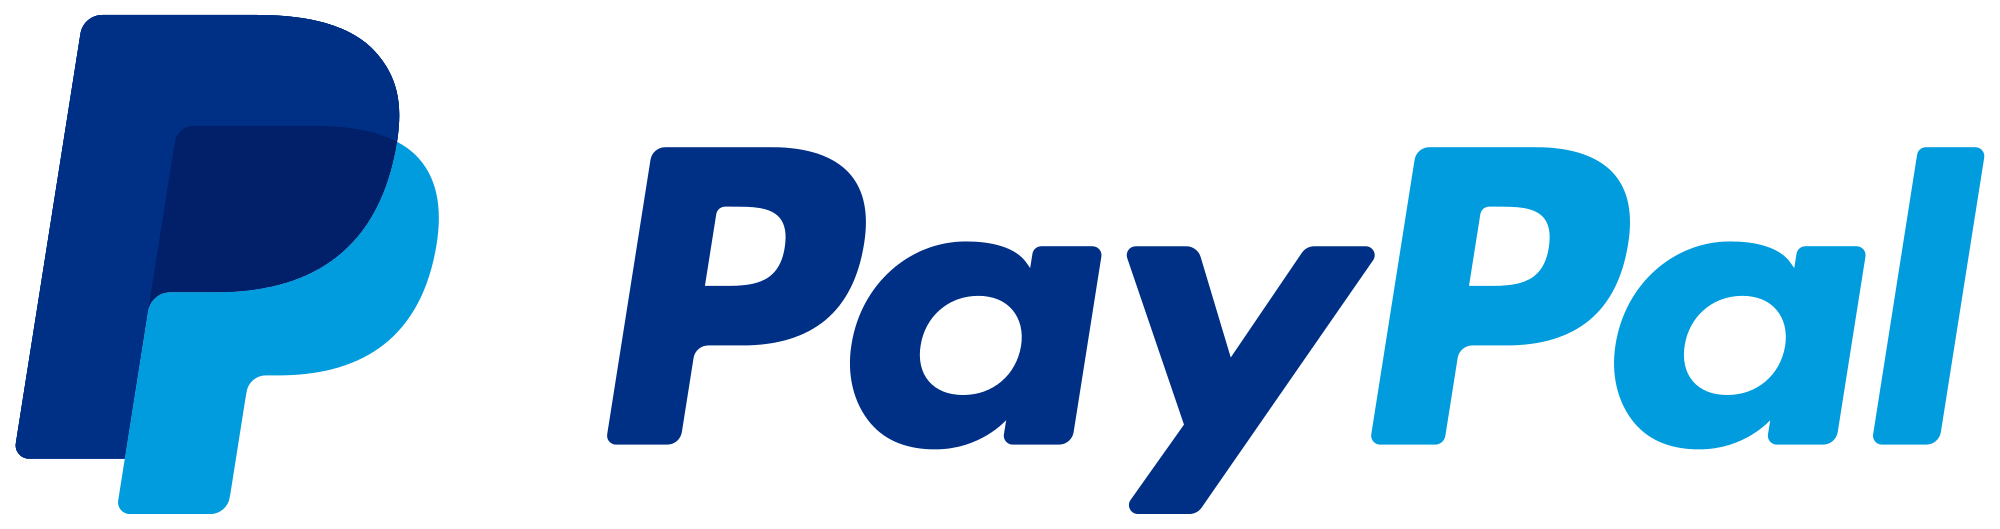 PayPal_2014_logo-svg.png